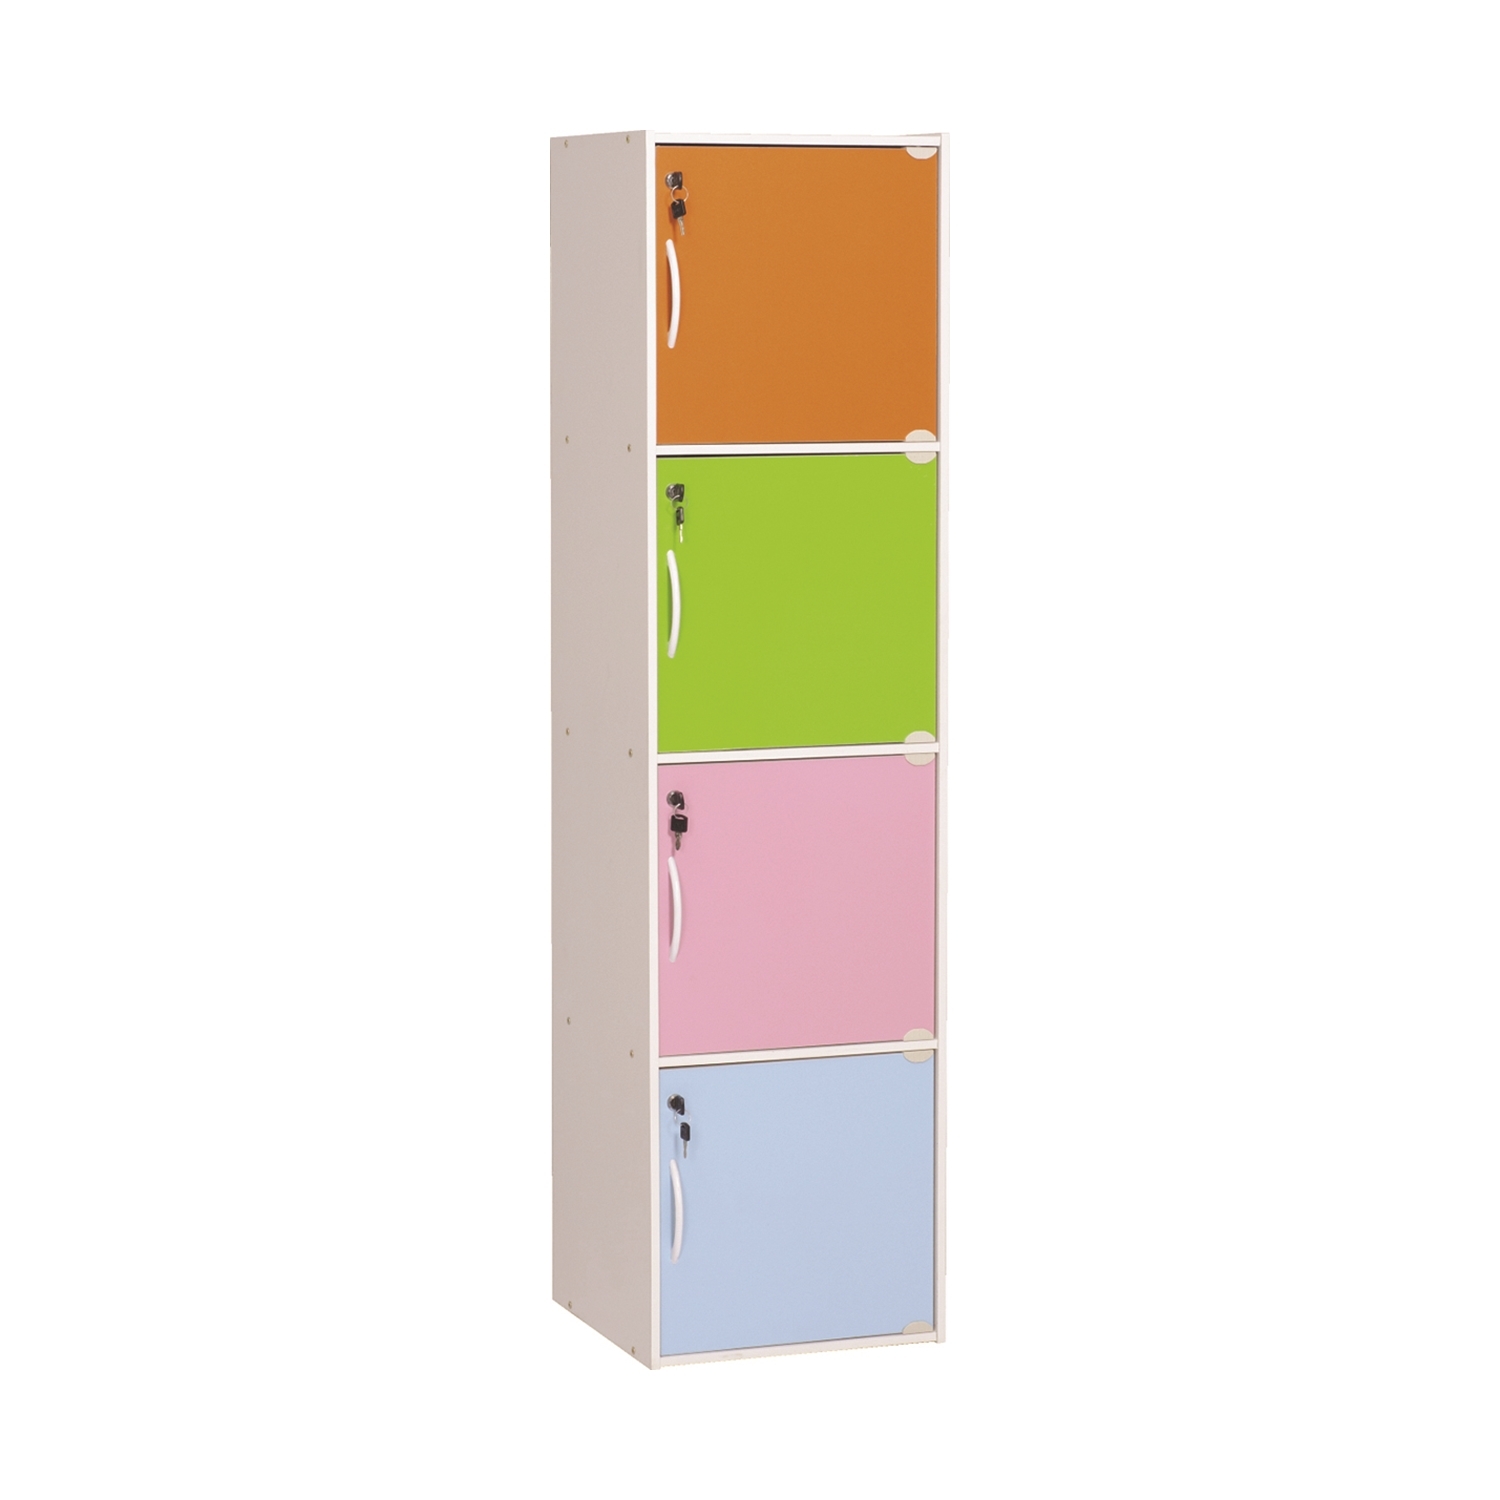 AIMIZON Dudiy 4 door storage box with lock in Light Colorful colour